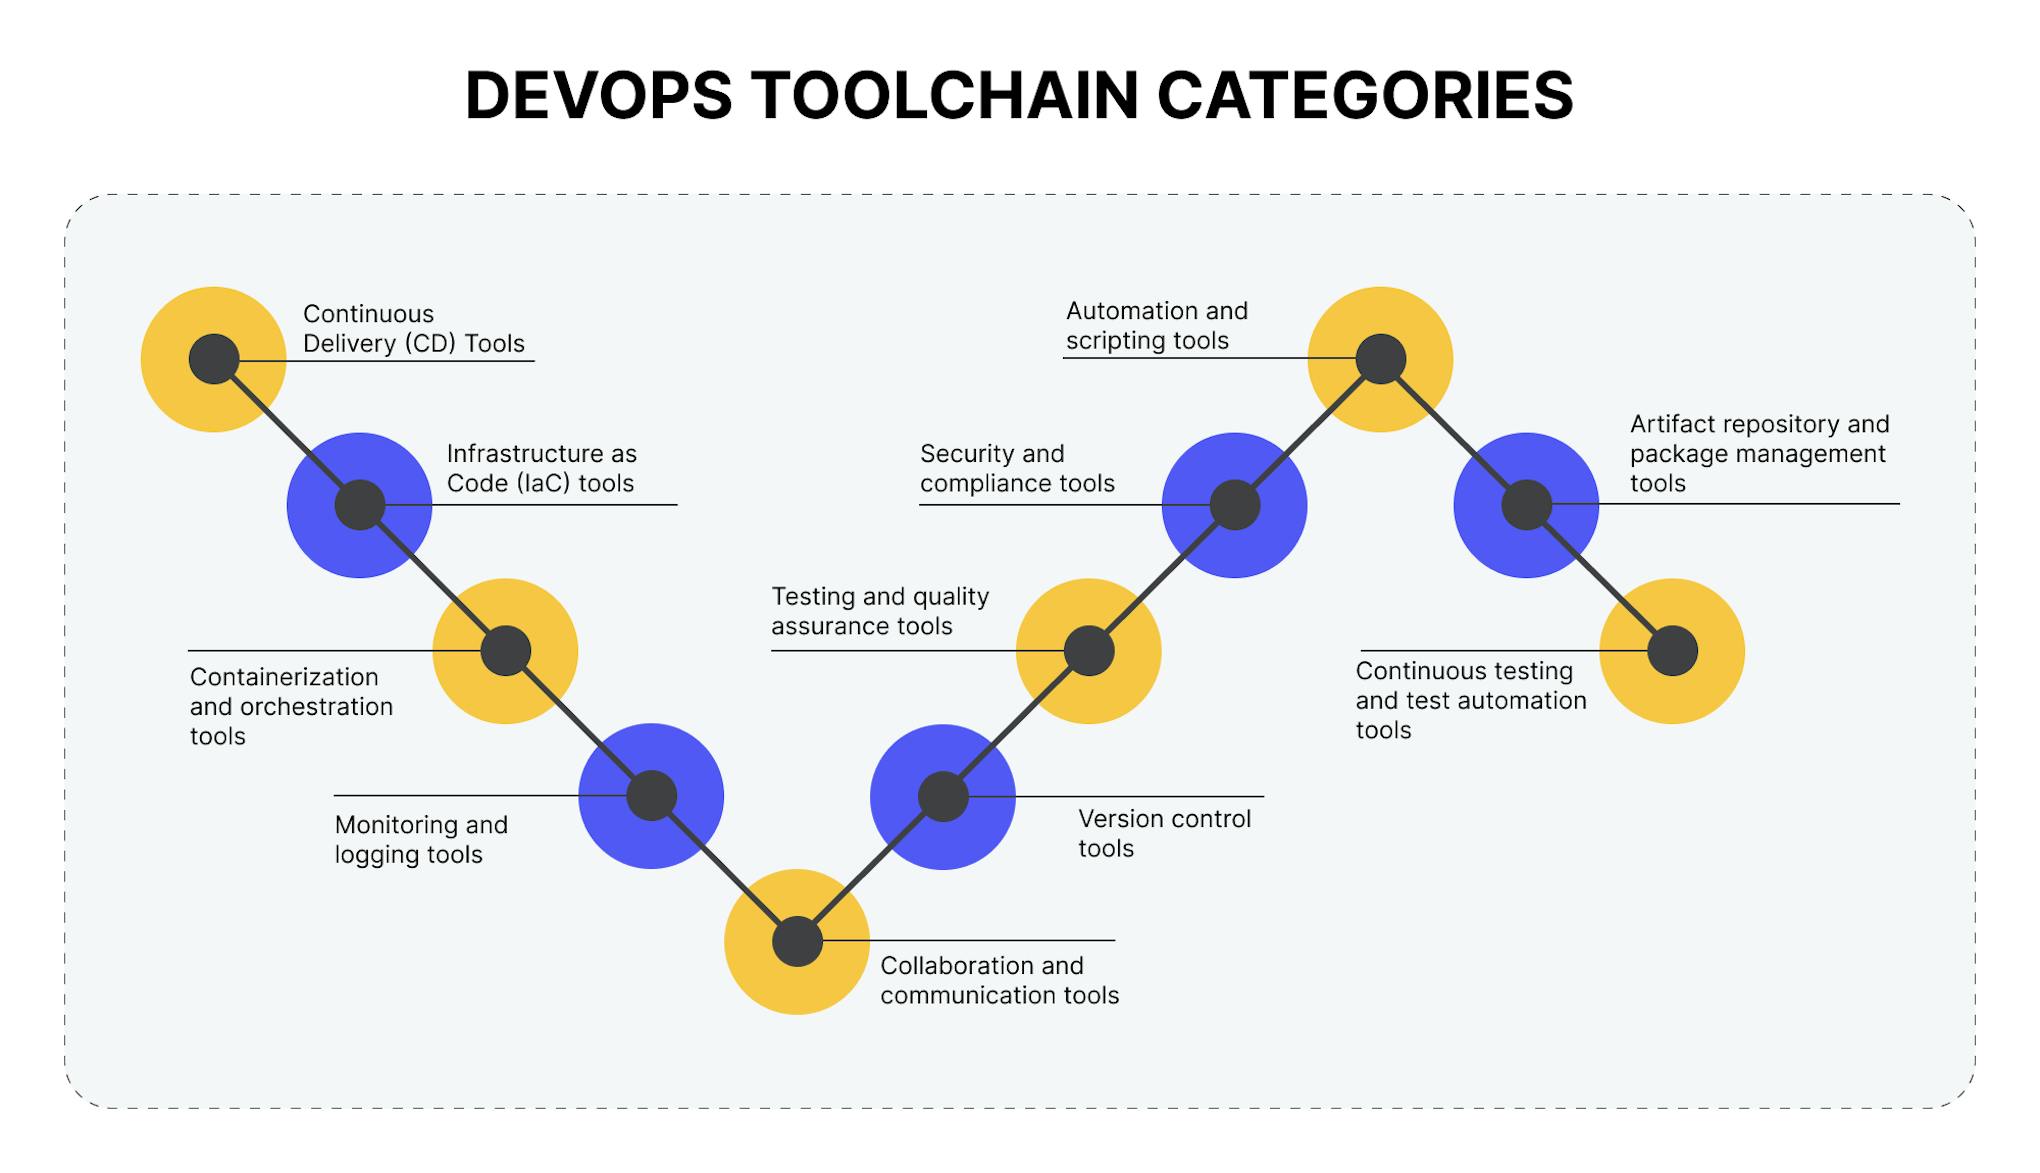 DevOps toolchain categories